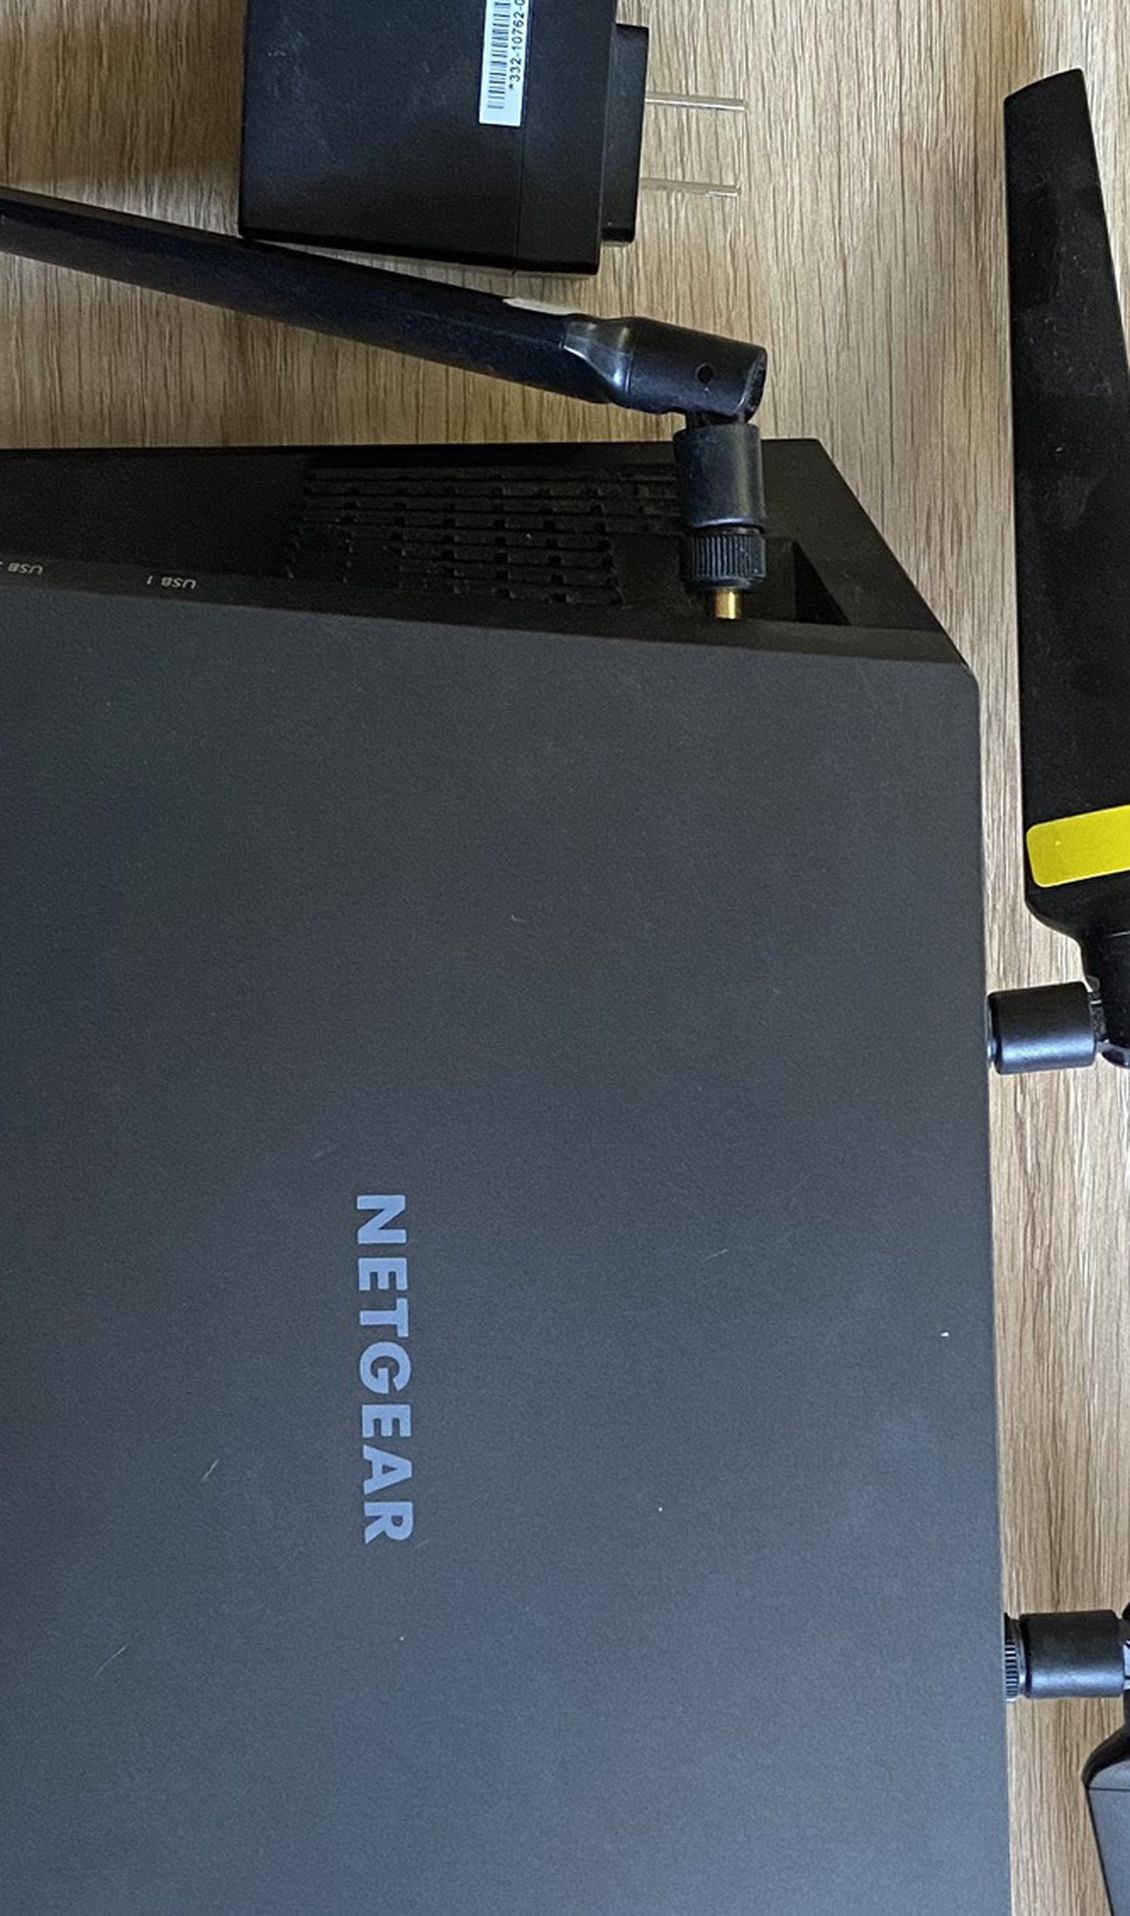 Netgear Nighthawk X4S Smart Wifi Router - Super Fast